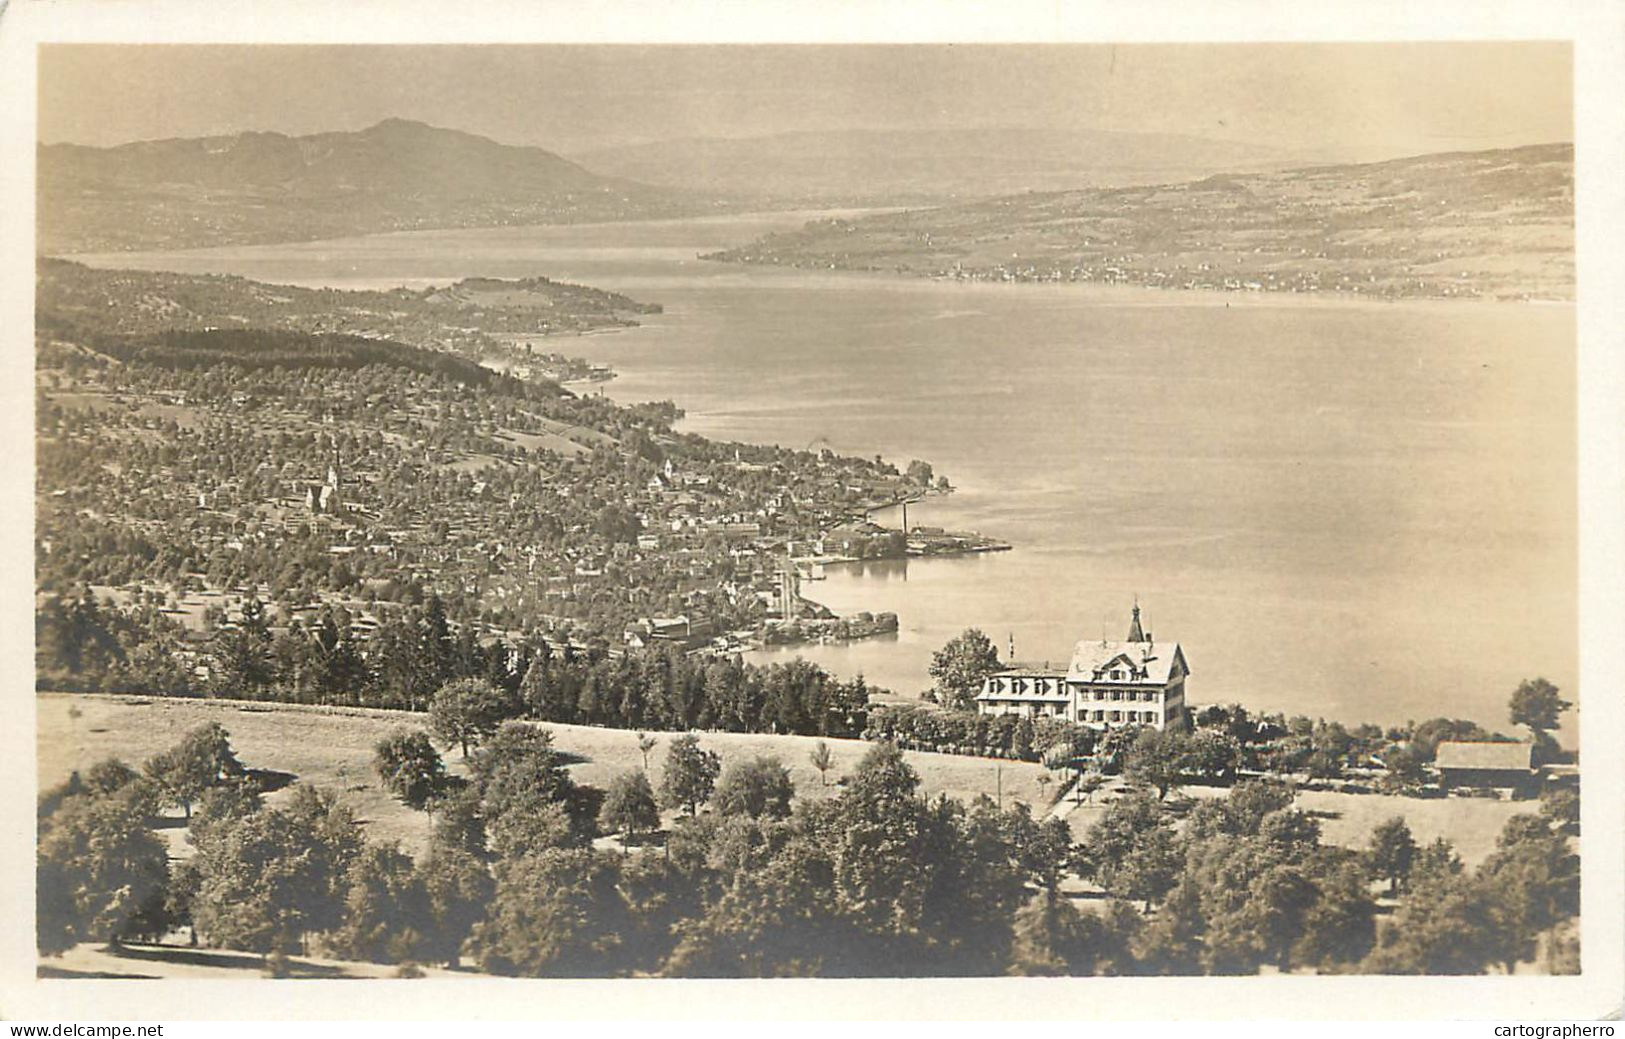 Postcard Switzerland Kurhotel Schnfels Feusisberg - Other & Unclassified